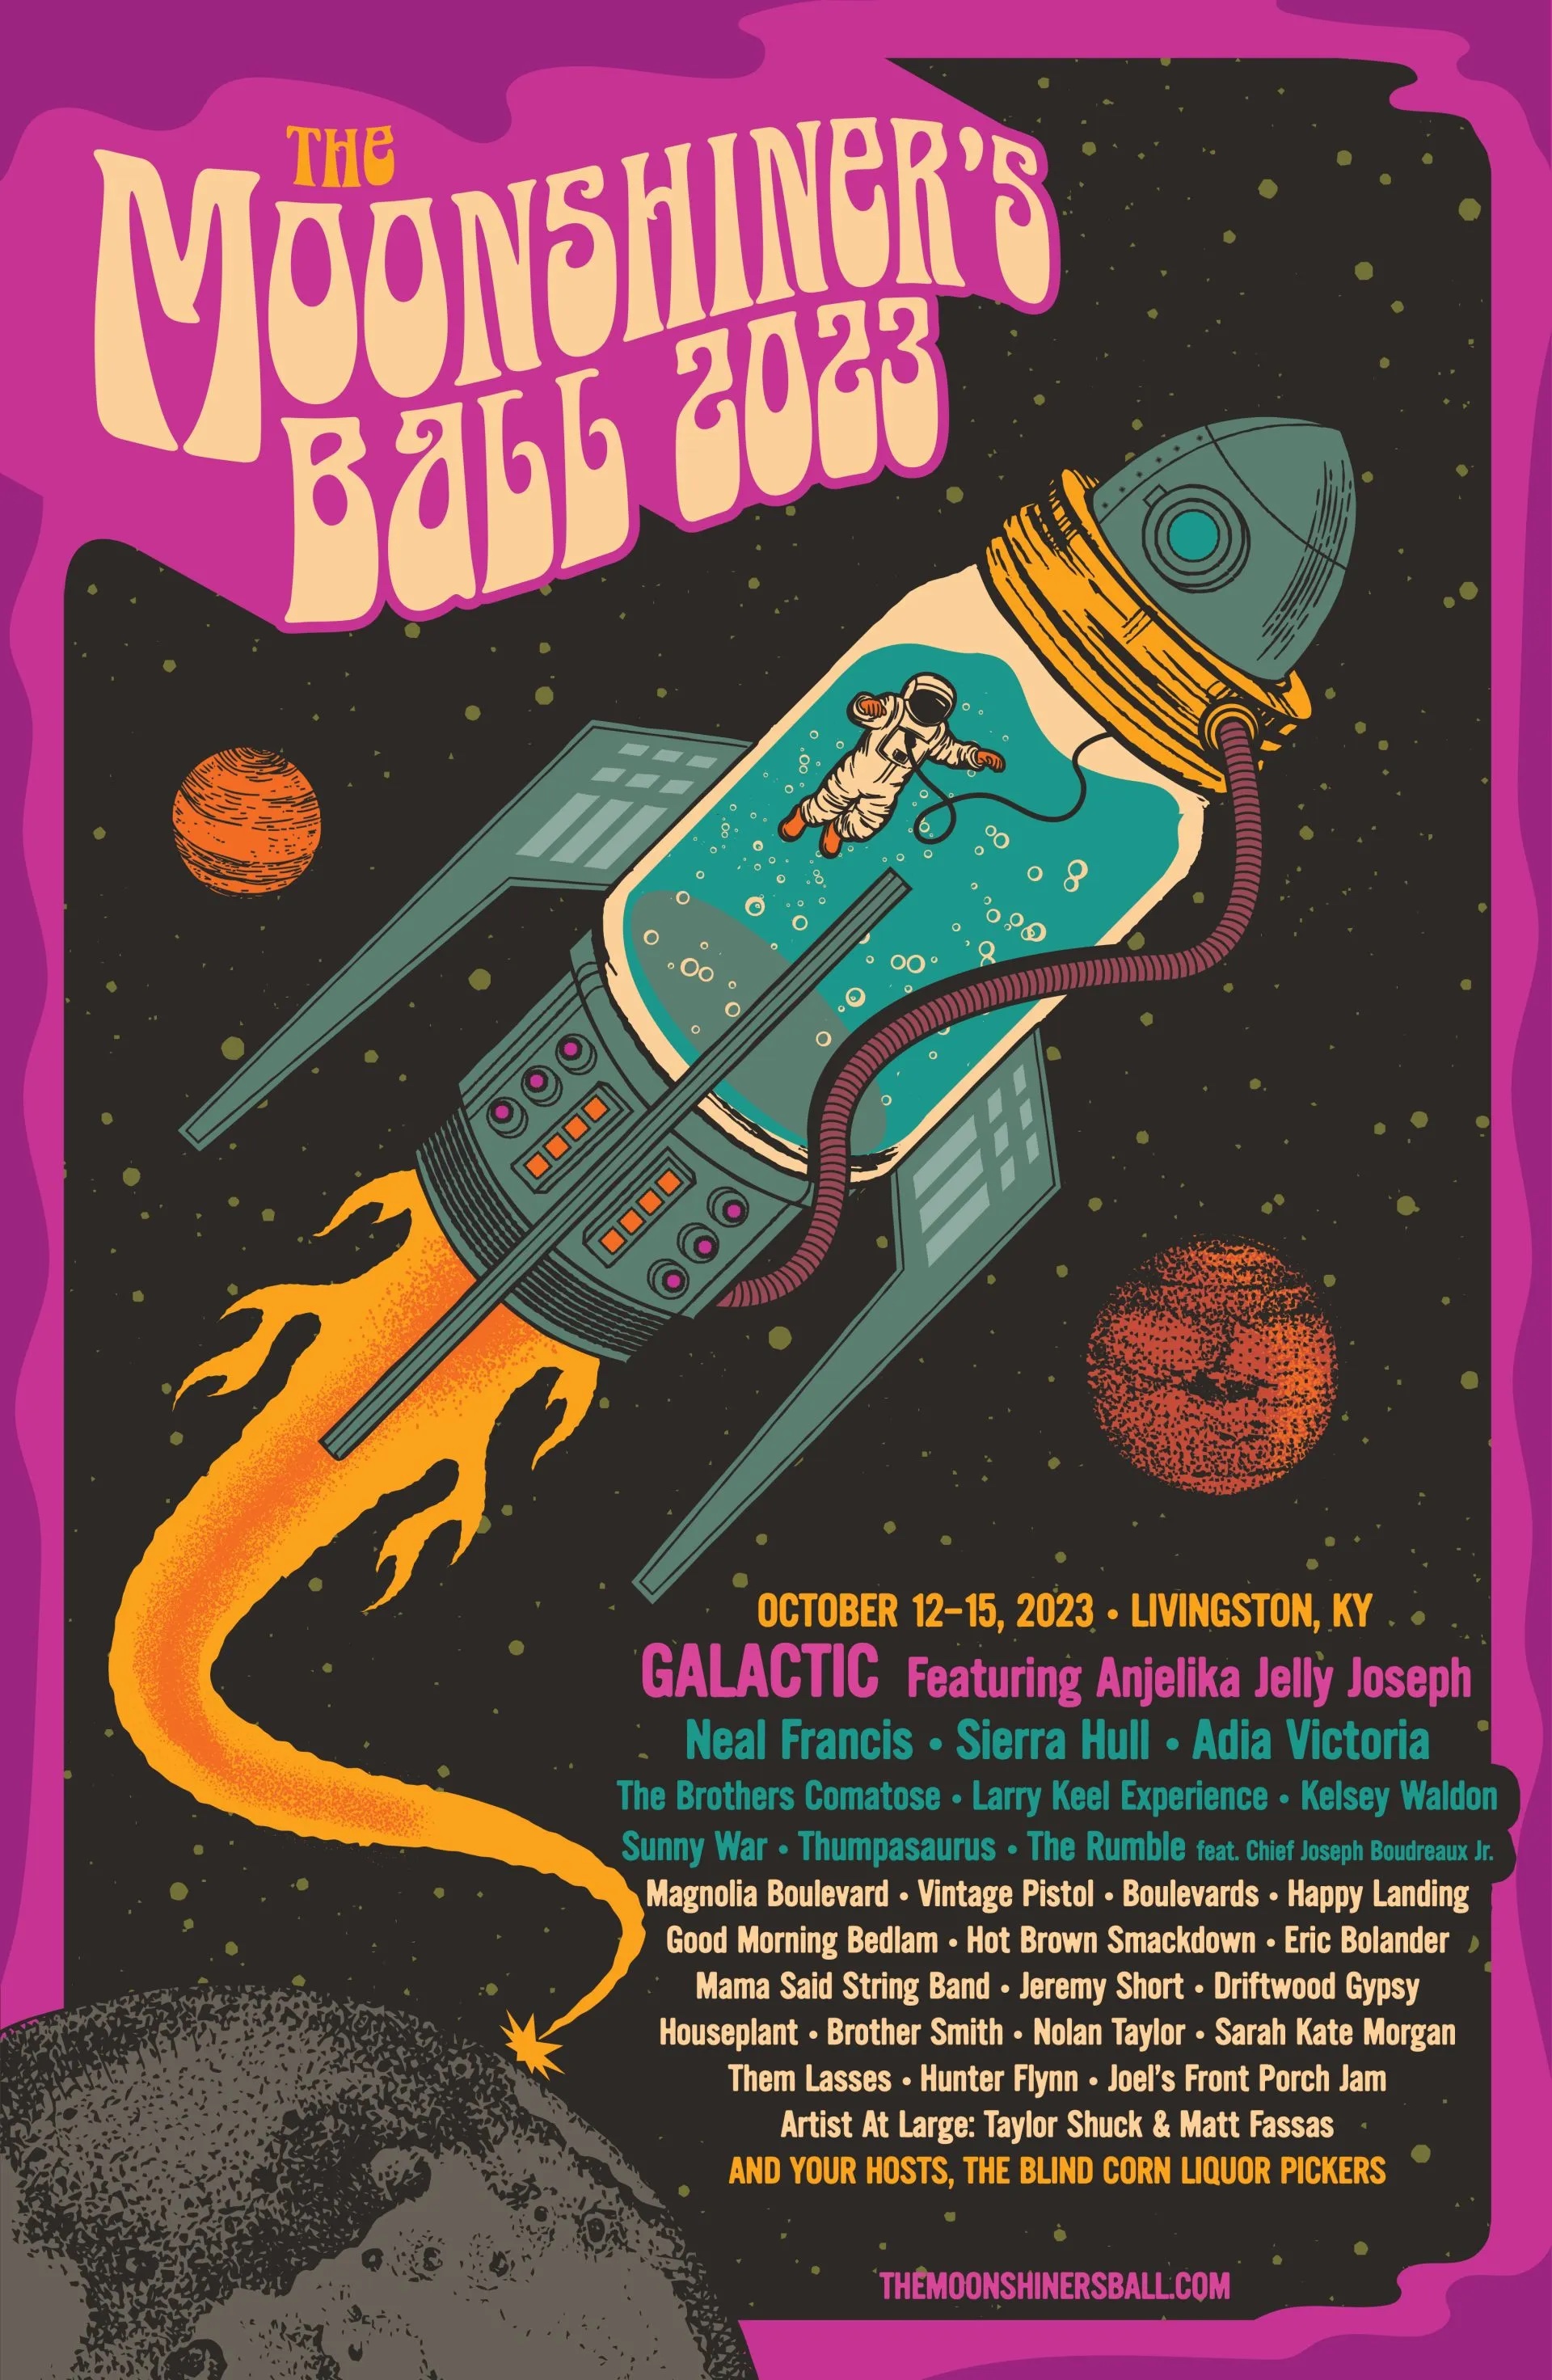 The Moonshiner’s Ball 2023 Lineup poster image